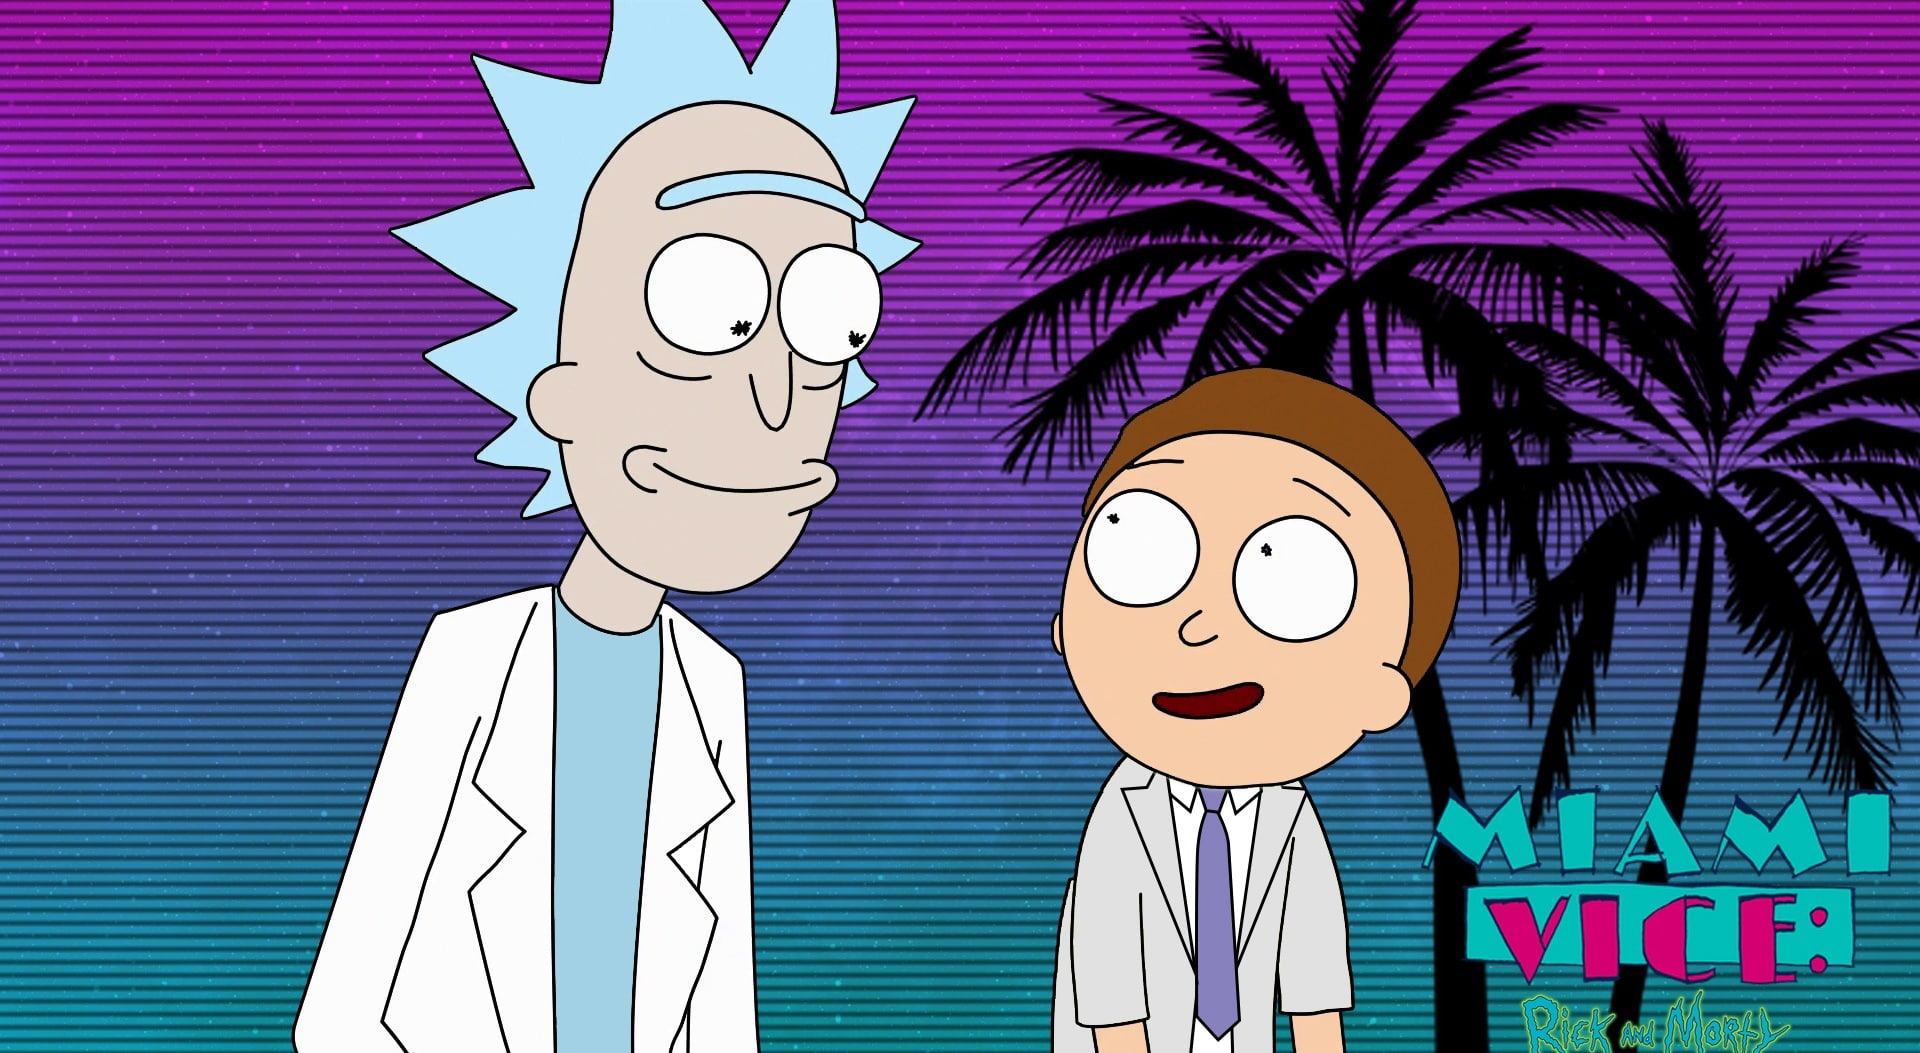 Rick and Morty - Miami vice ver.1, Rick & Morty digital wallpaper